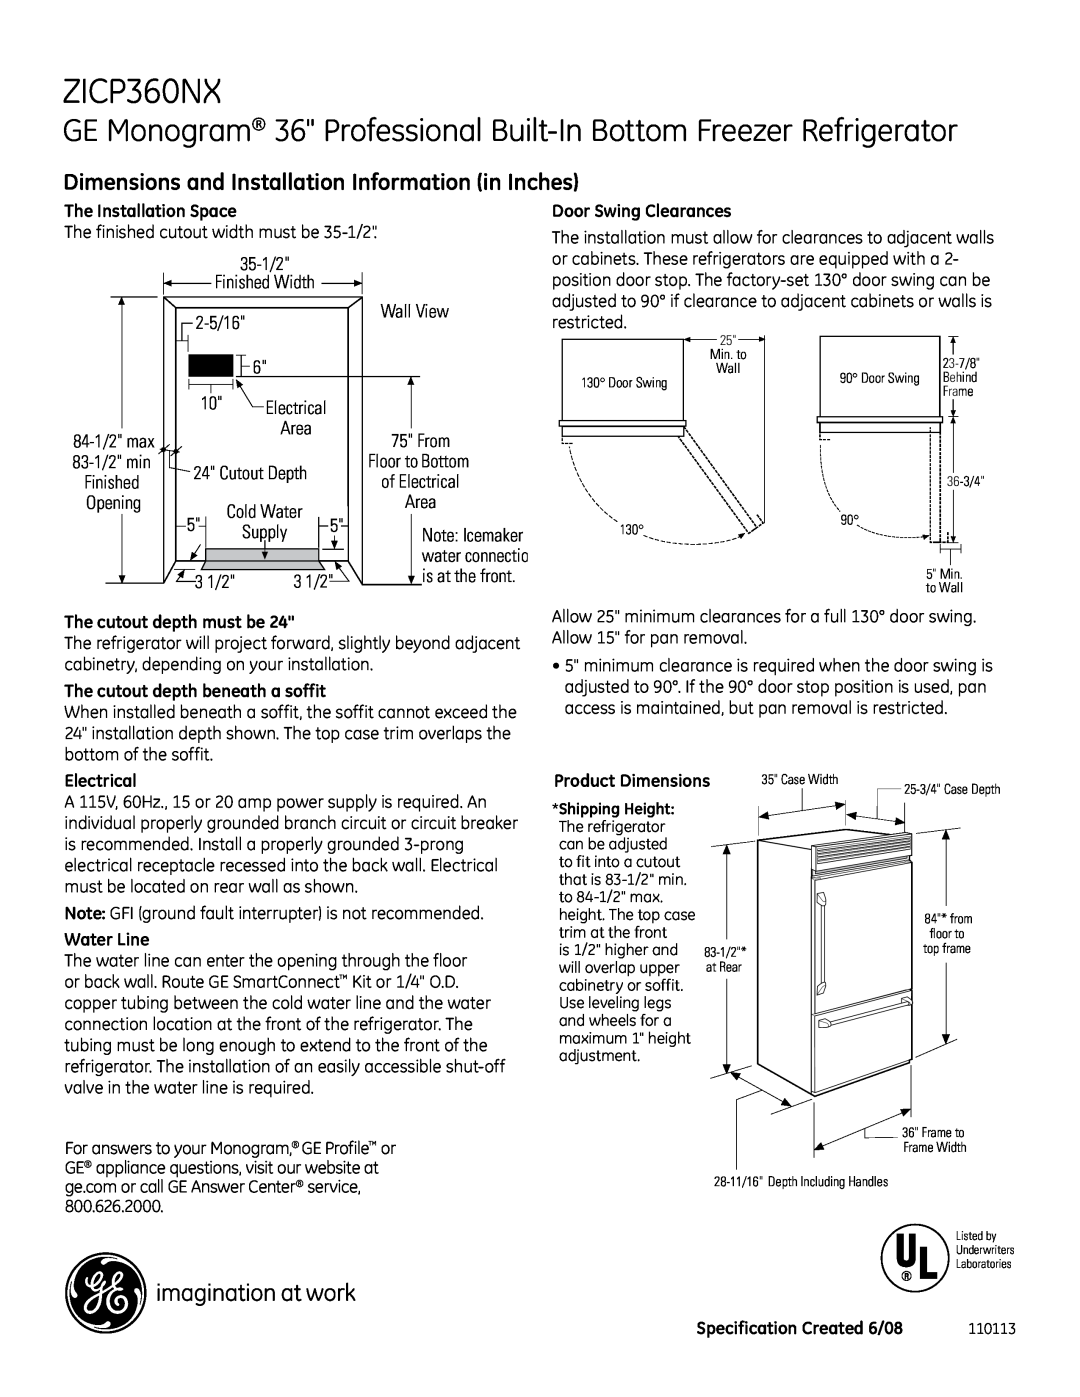 GE Monogram ZICP360NX dimensions GE Monogram 36 Professional Built-In Bottom Freezer Refrigerator, 35-1/2 Finished Width 